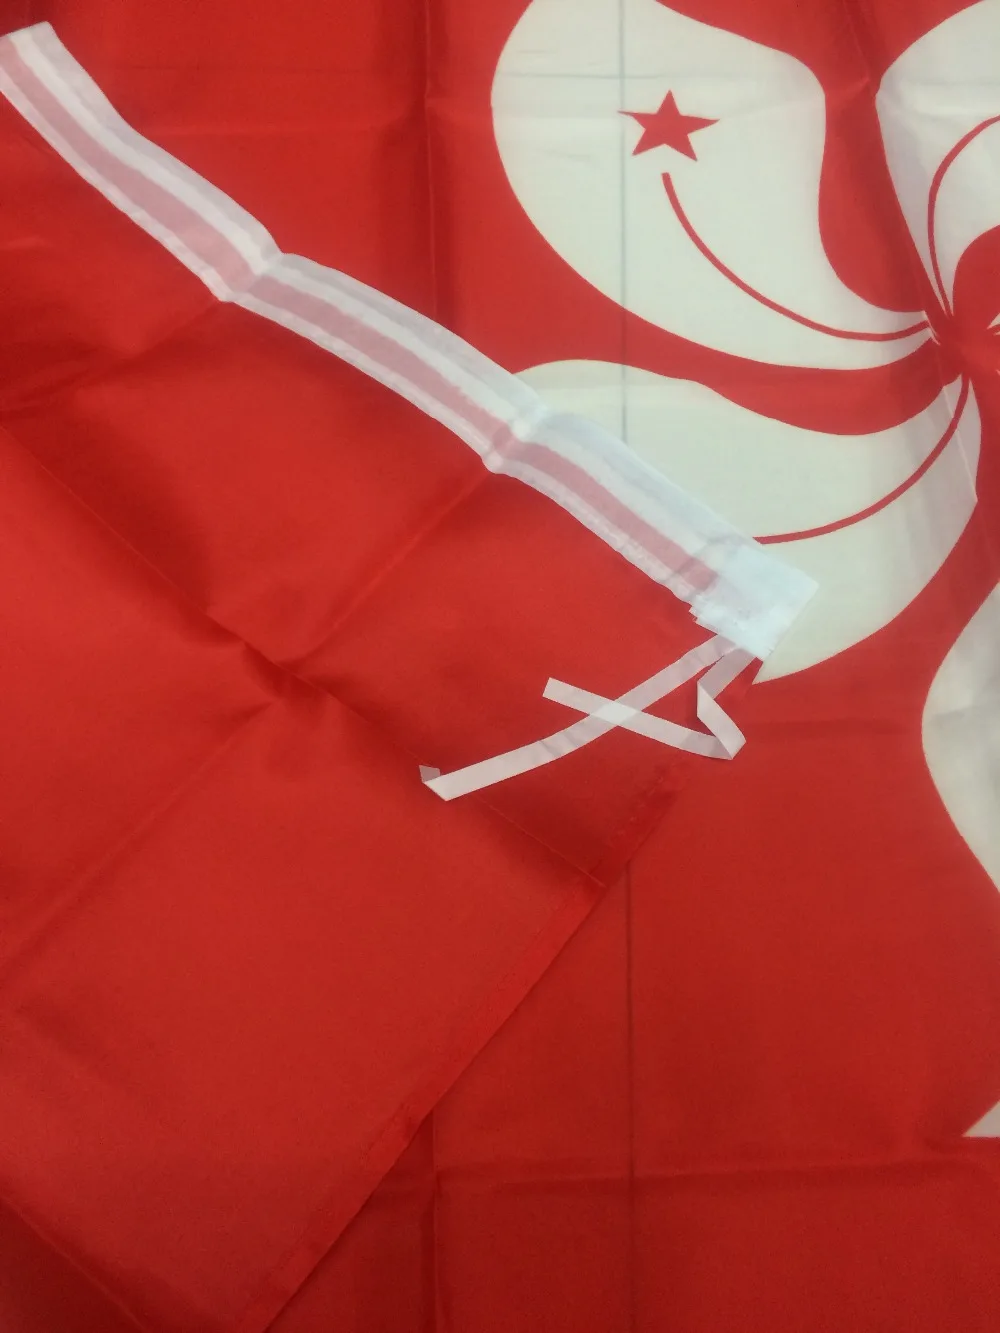 Флаг Гонконга 3ft X 5ft флаг полиэстер район Гонконг флаг Летающий Размер № 4 144*96 см